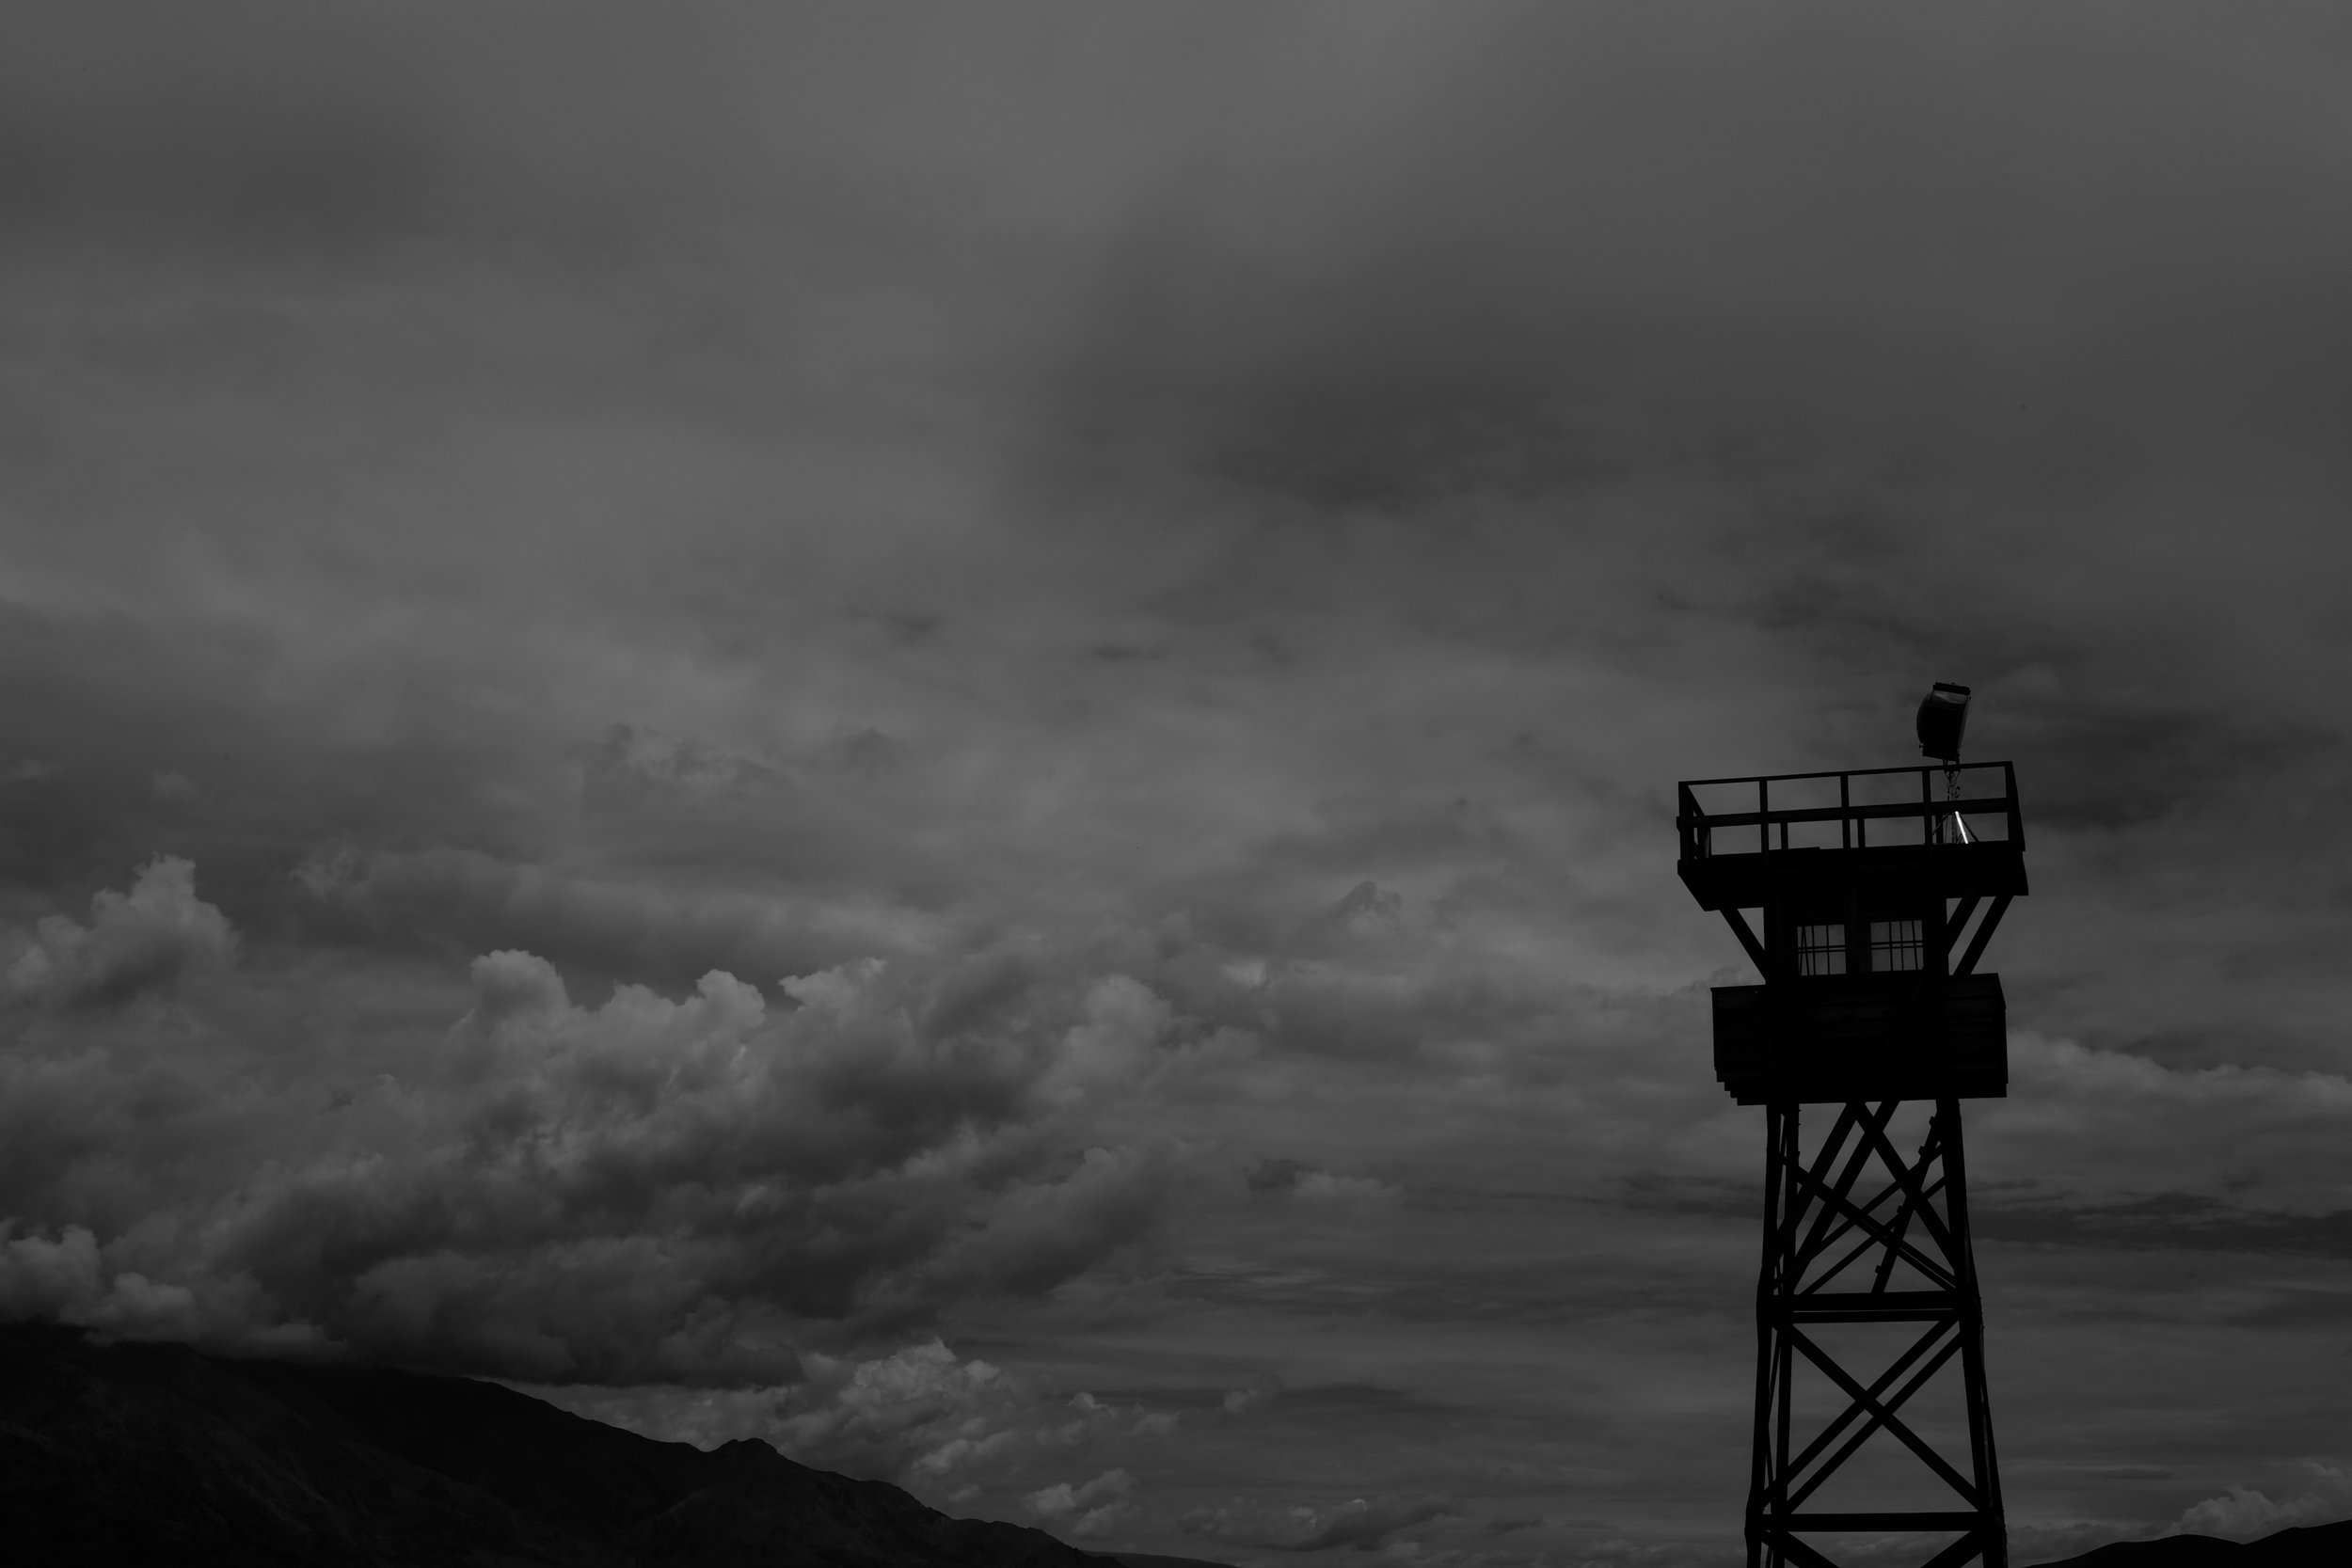  Manzanar War Relocation Center/Guard Tower, Independence, CA 